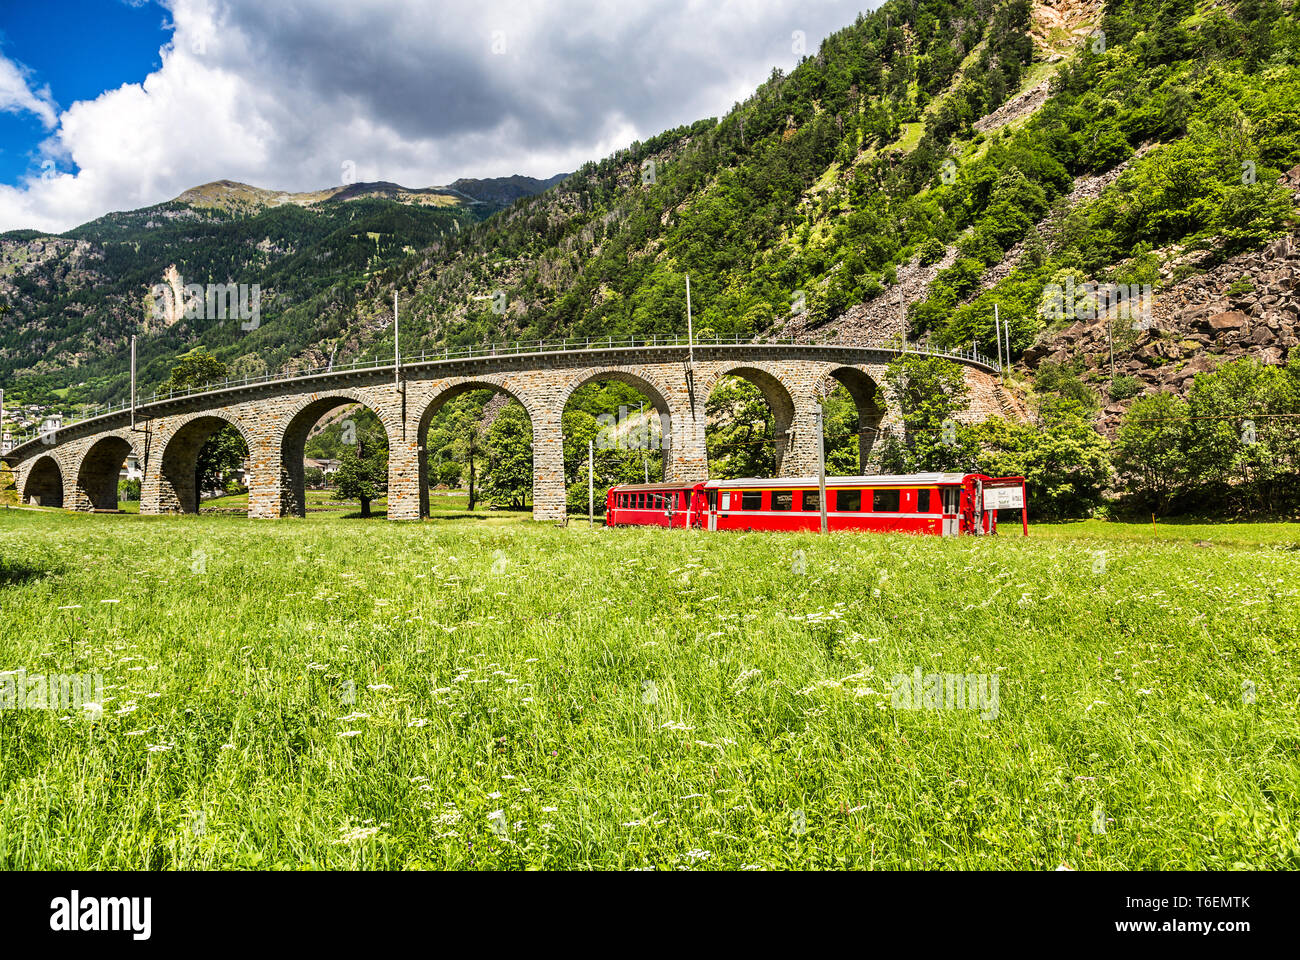 Swiss mountain train Stock Photo